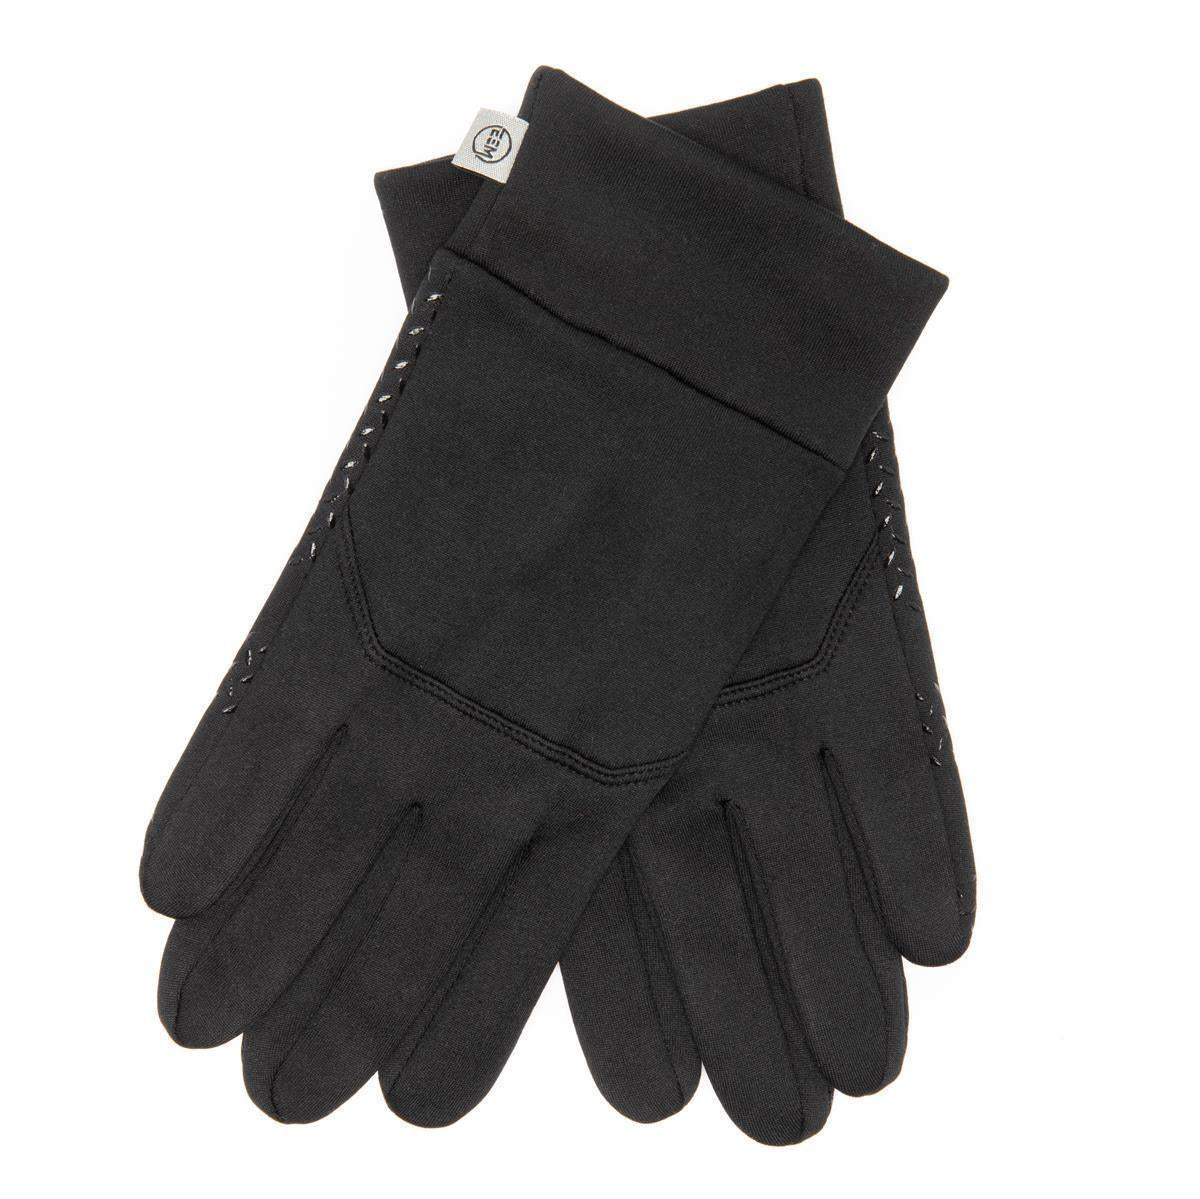 EEM Herren  Sporthandschuhe, Winterhandschuhe, elastisches Material, Touchfunktion, Anti-Rutsch Funktion